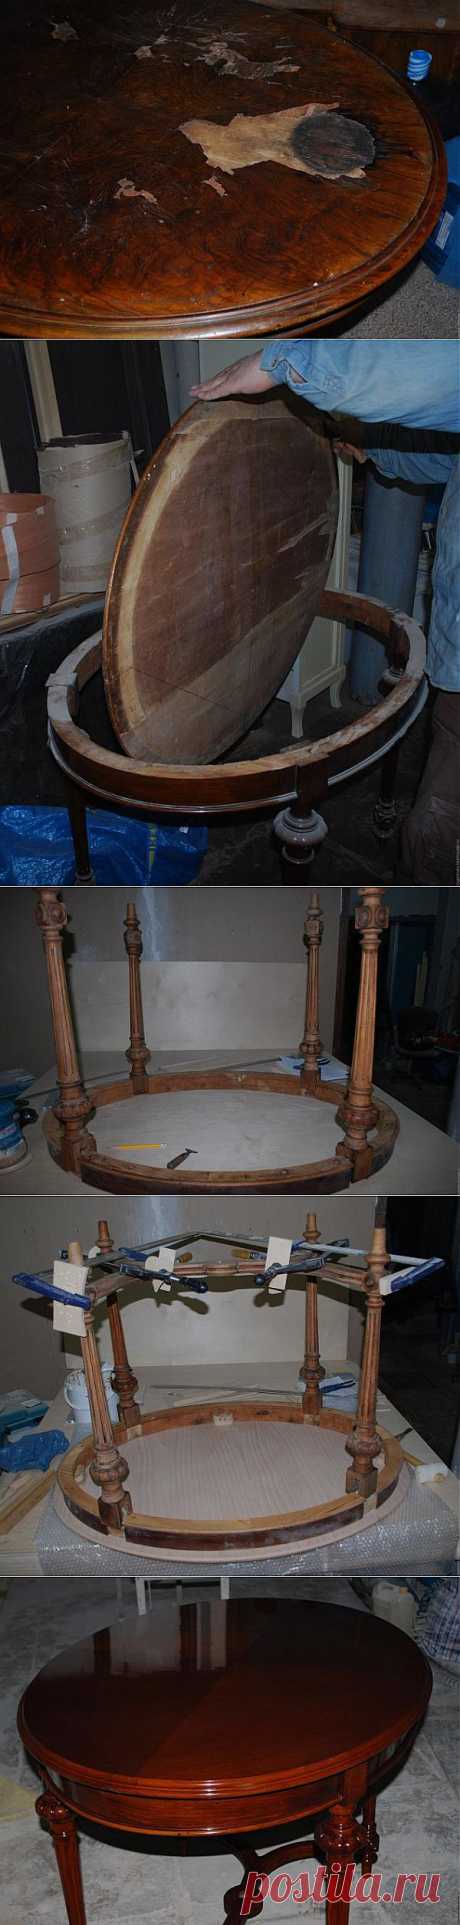 Реставрация стола - Ярмарка Мастеров - ручная работа, handmade